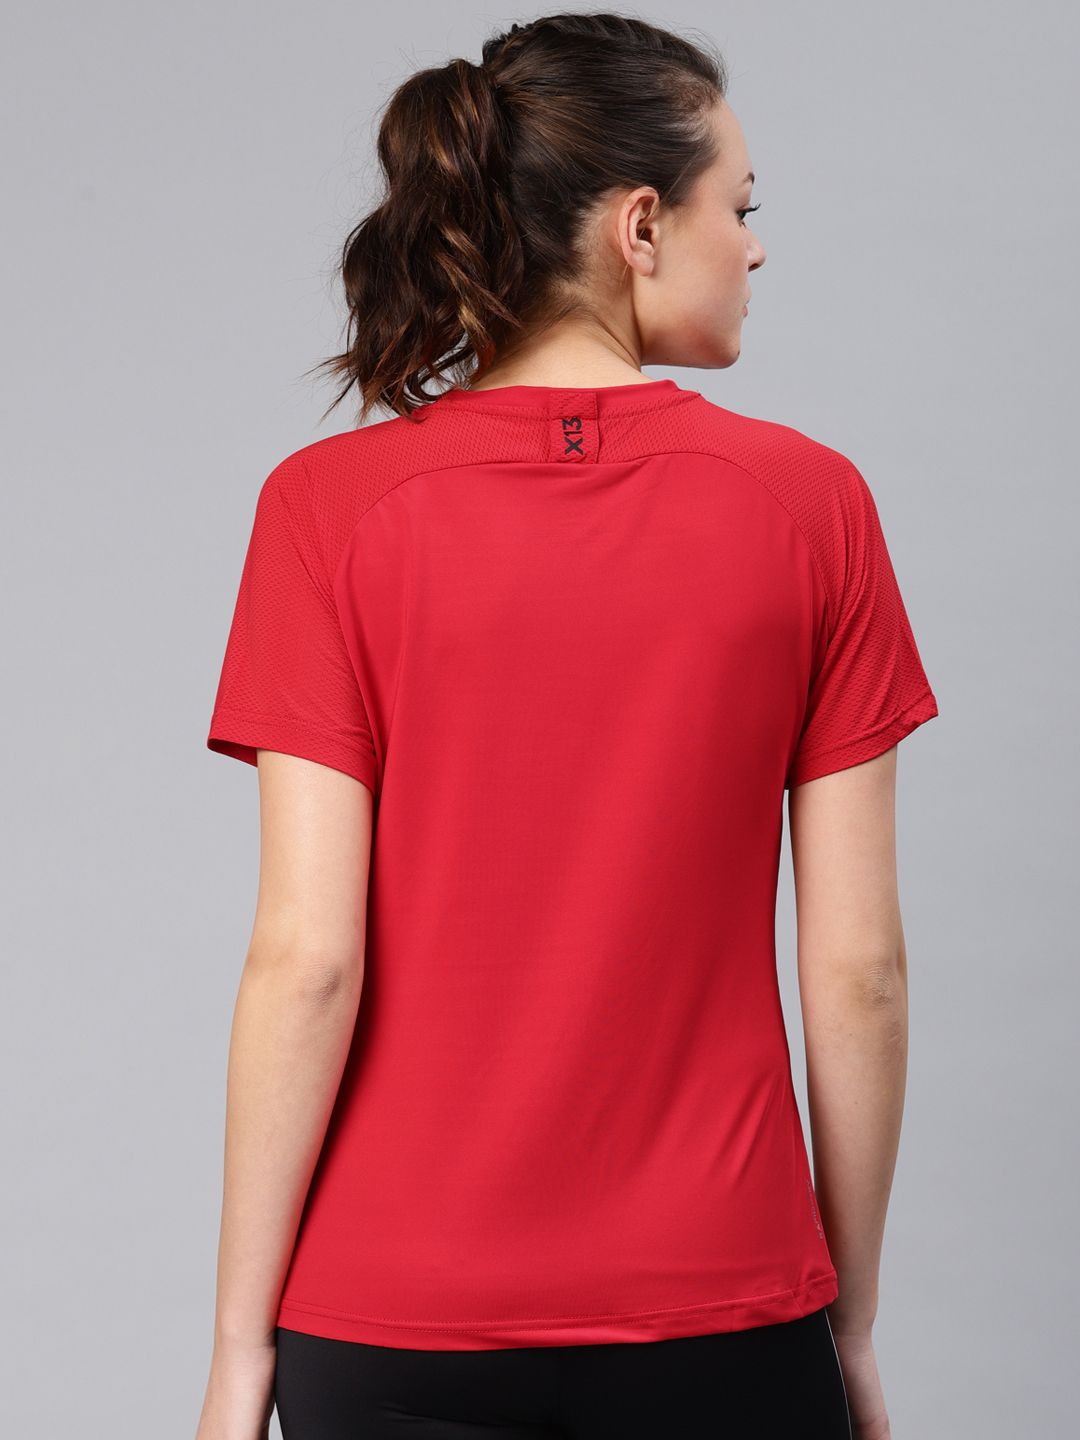 HRX by Hrithik Roshan Women Red Training T-shirt Price in India